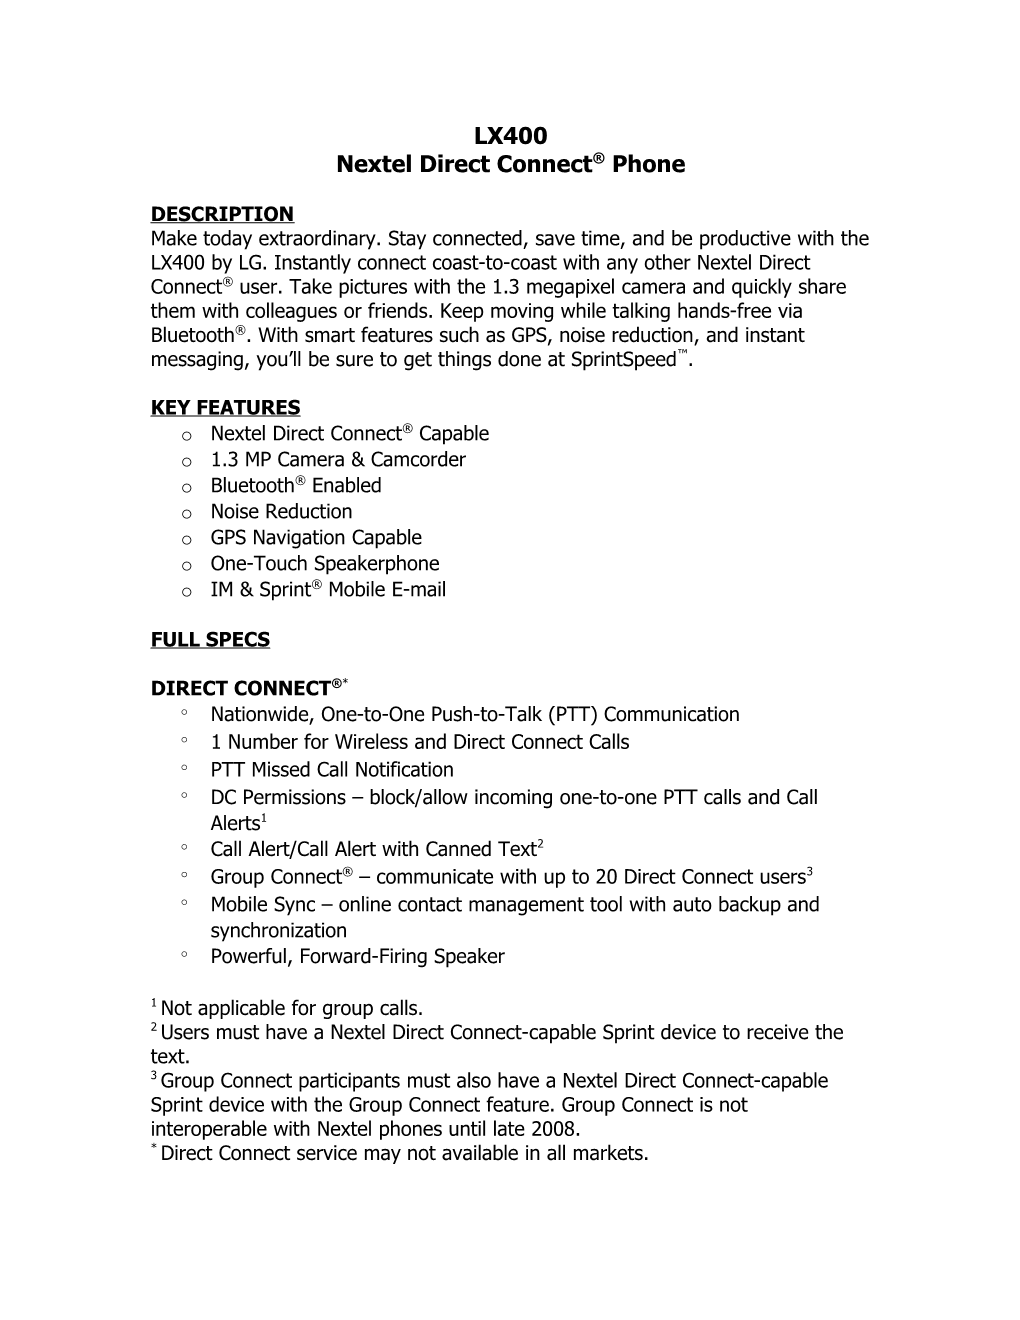 Nextel Direct Connect Phone